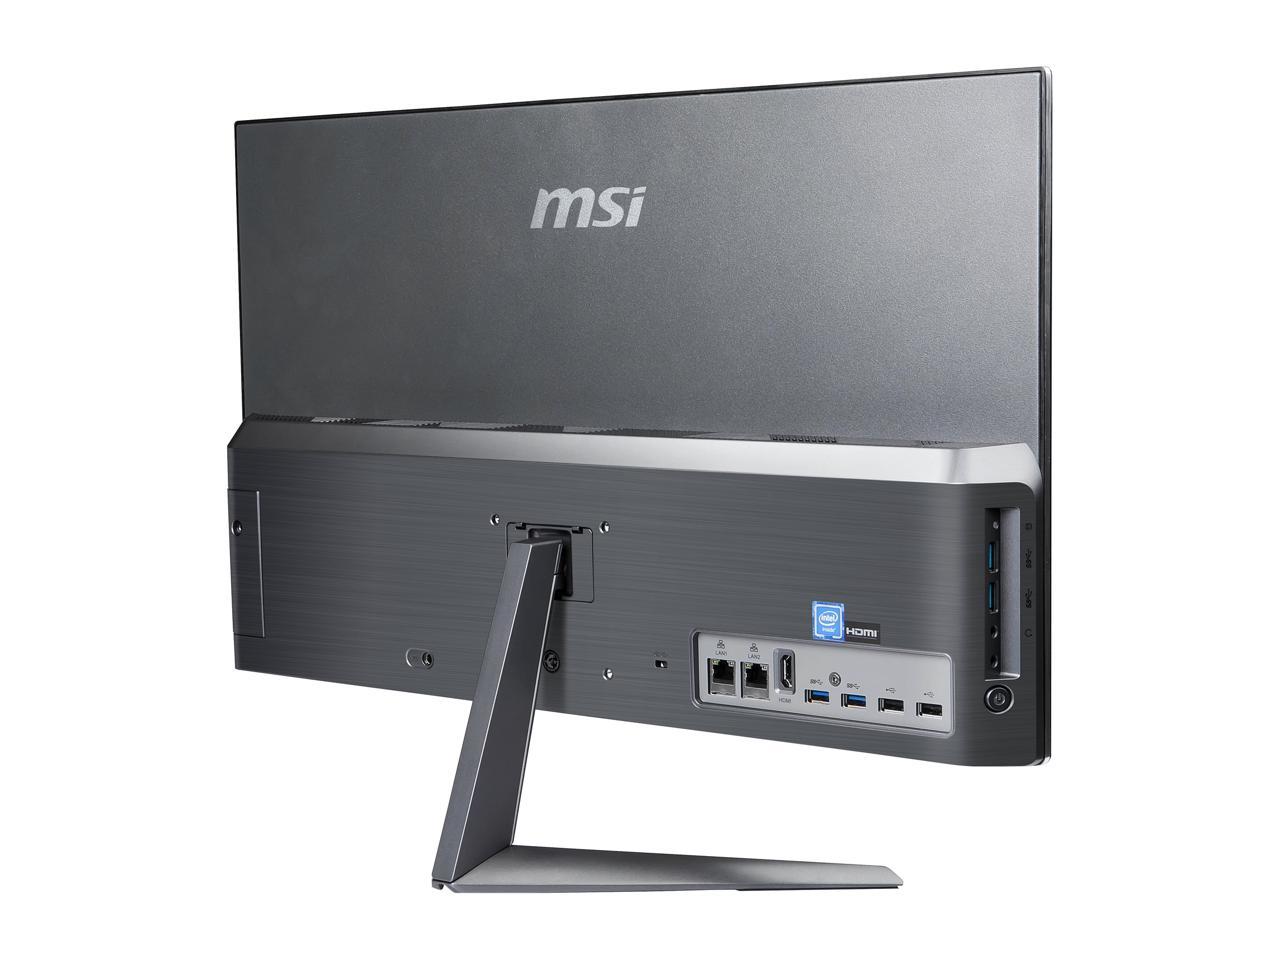 23.8 моноблок msi pro. MSI Pro 24x 10m. Моноблок MSI Pro ap272 12m-097xru. MSI Pro ap241 11m. Зарядка на моноблок MSI Pro 24x.